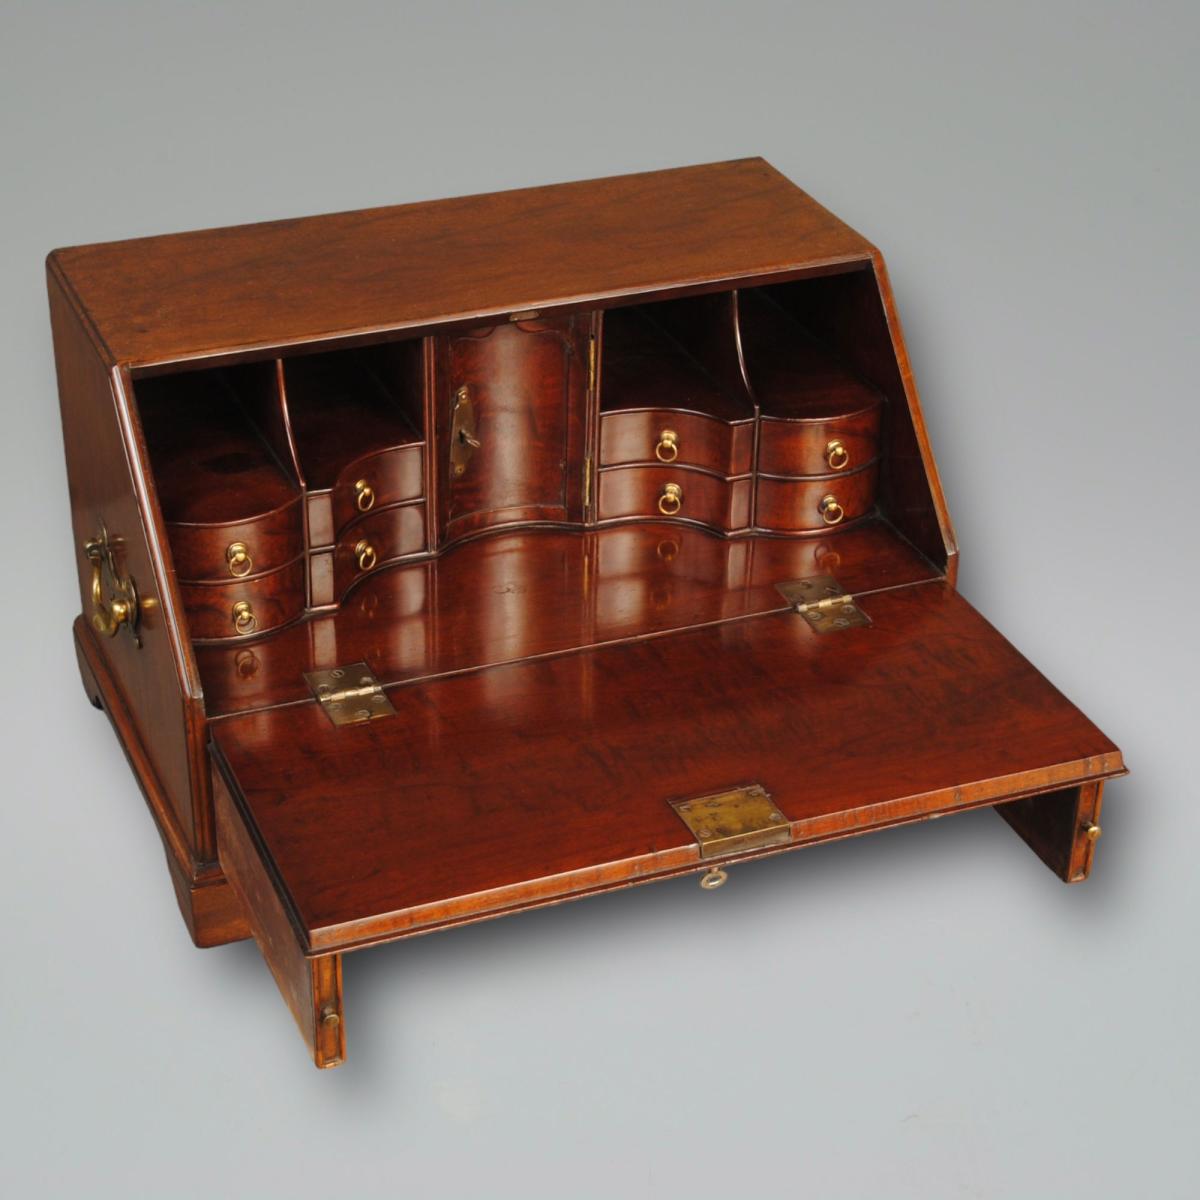 A Rare Miniature 18th Century Mahogany Table Bureau